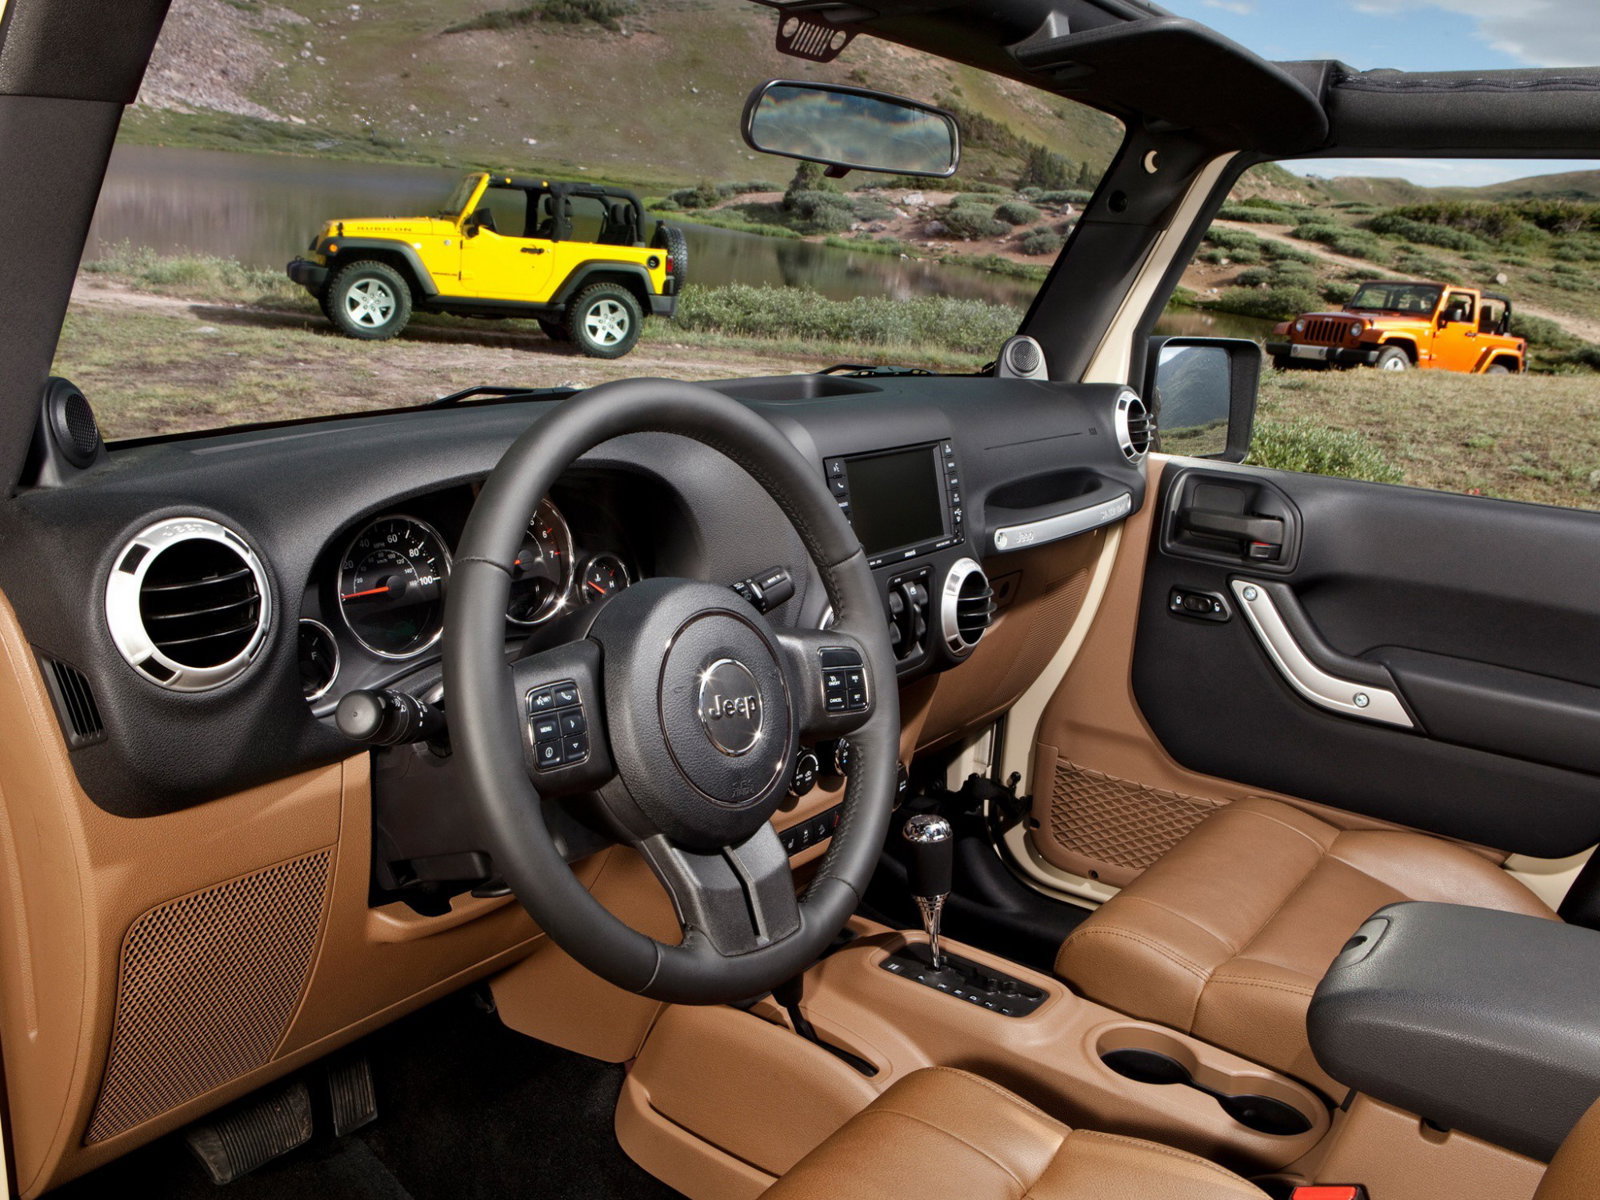 Jeep Wrangler JK (2007-present): Review, Problems, Specs | DriveMag Cars